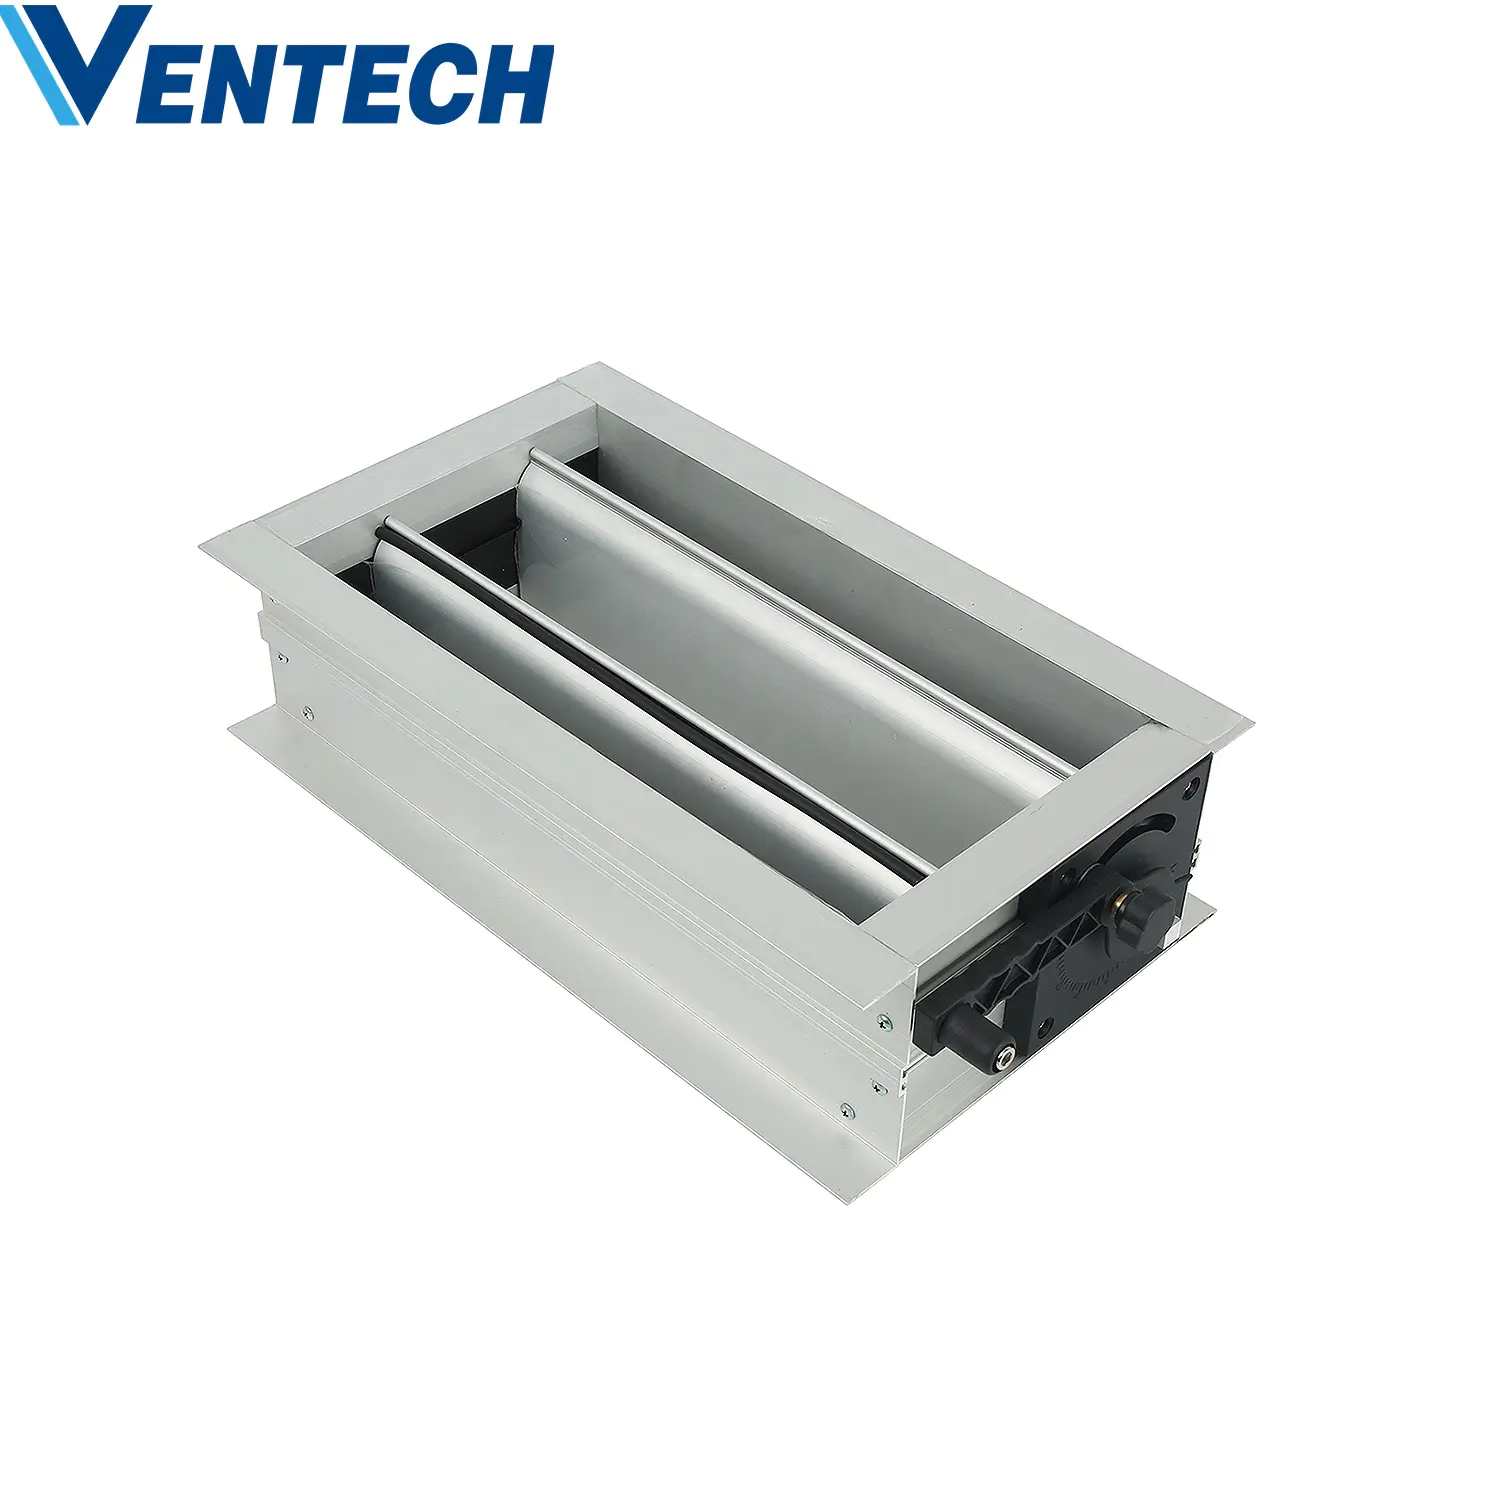 HVAC Air Duct Work Ventilation Aluminium Adjustable Oppsed Blades Gear Air Volume Control Damper